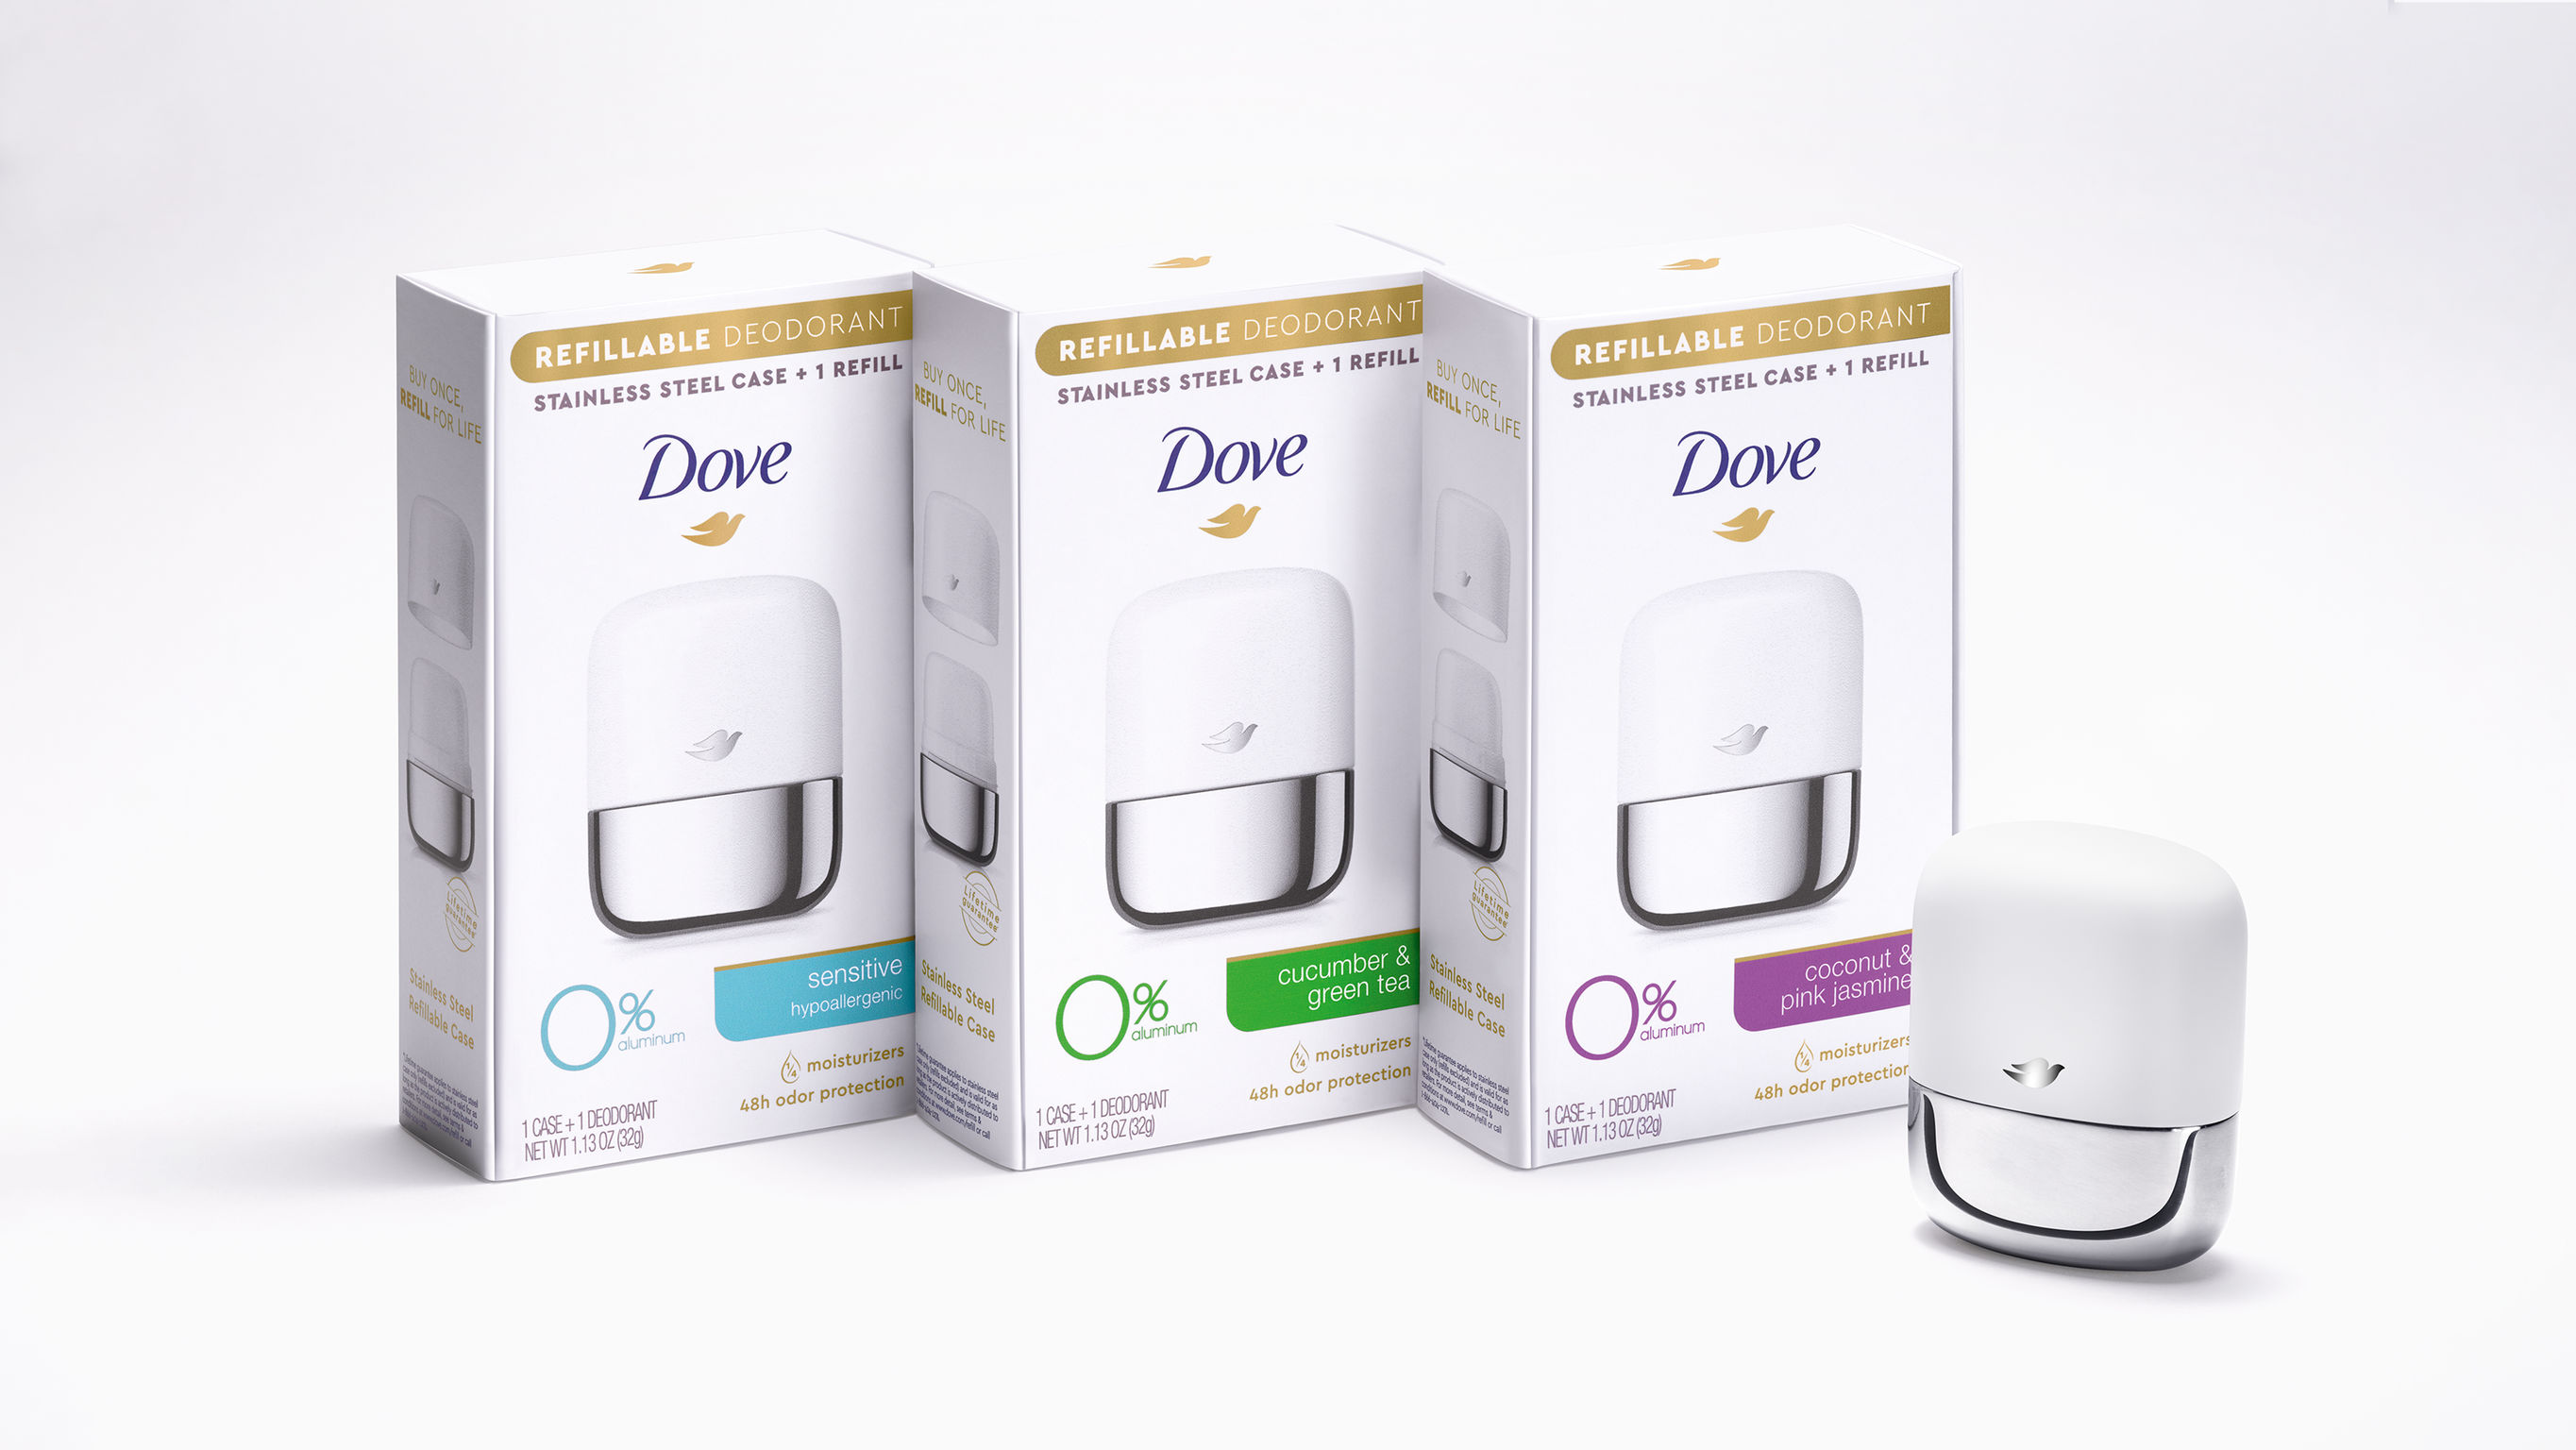 Dove | Refillable deodorant